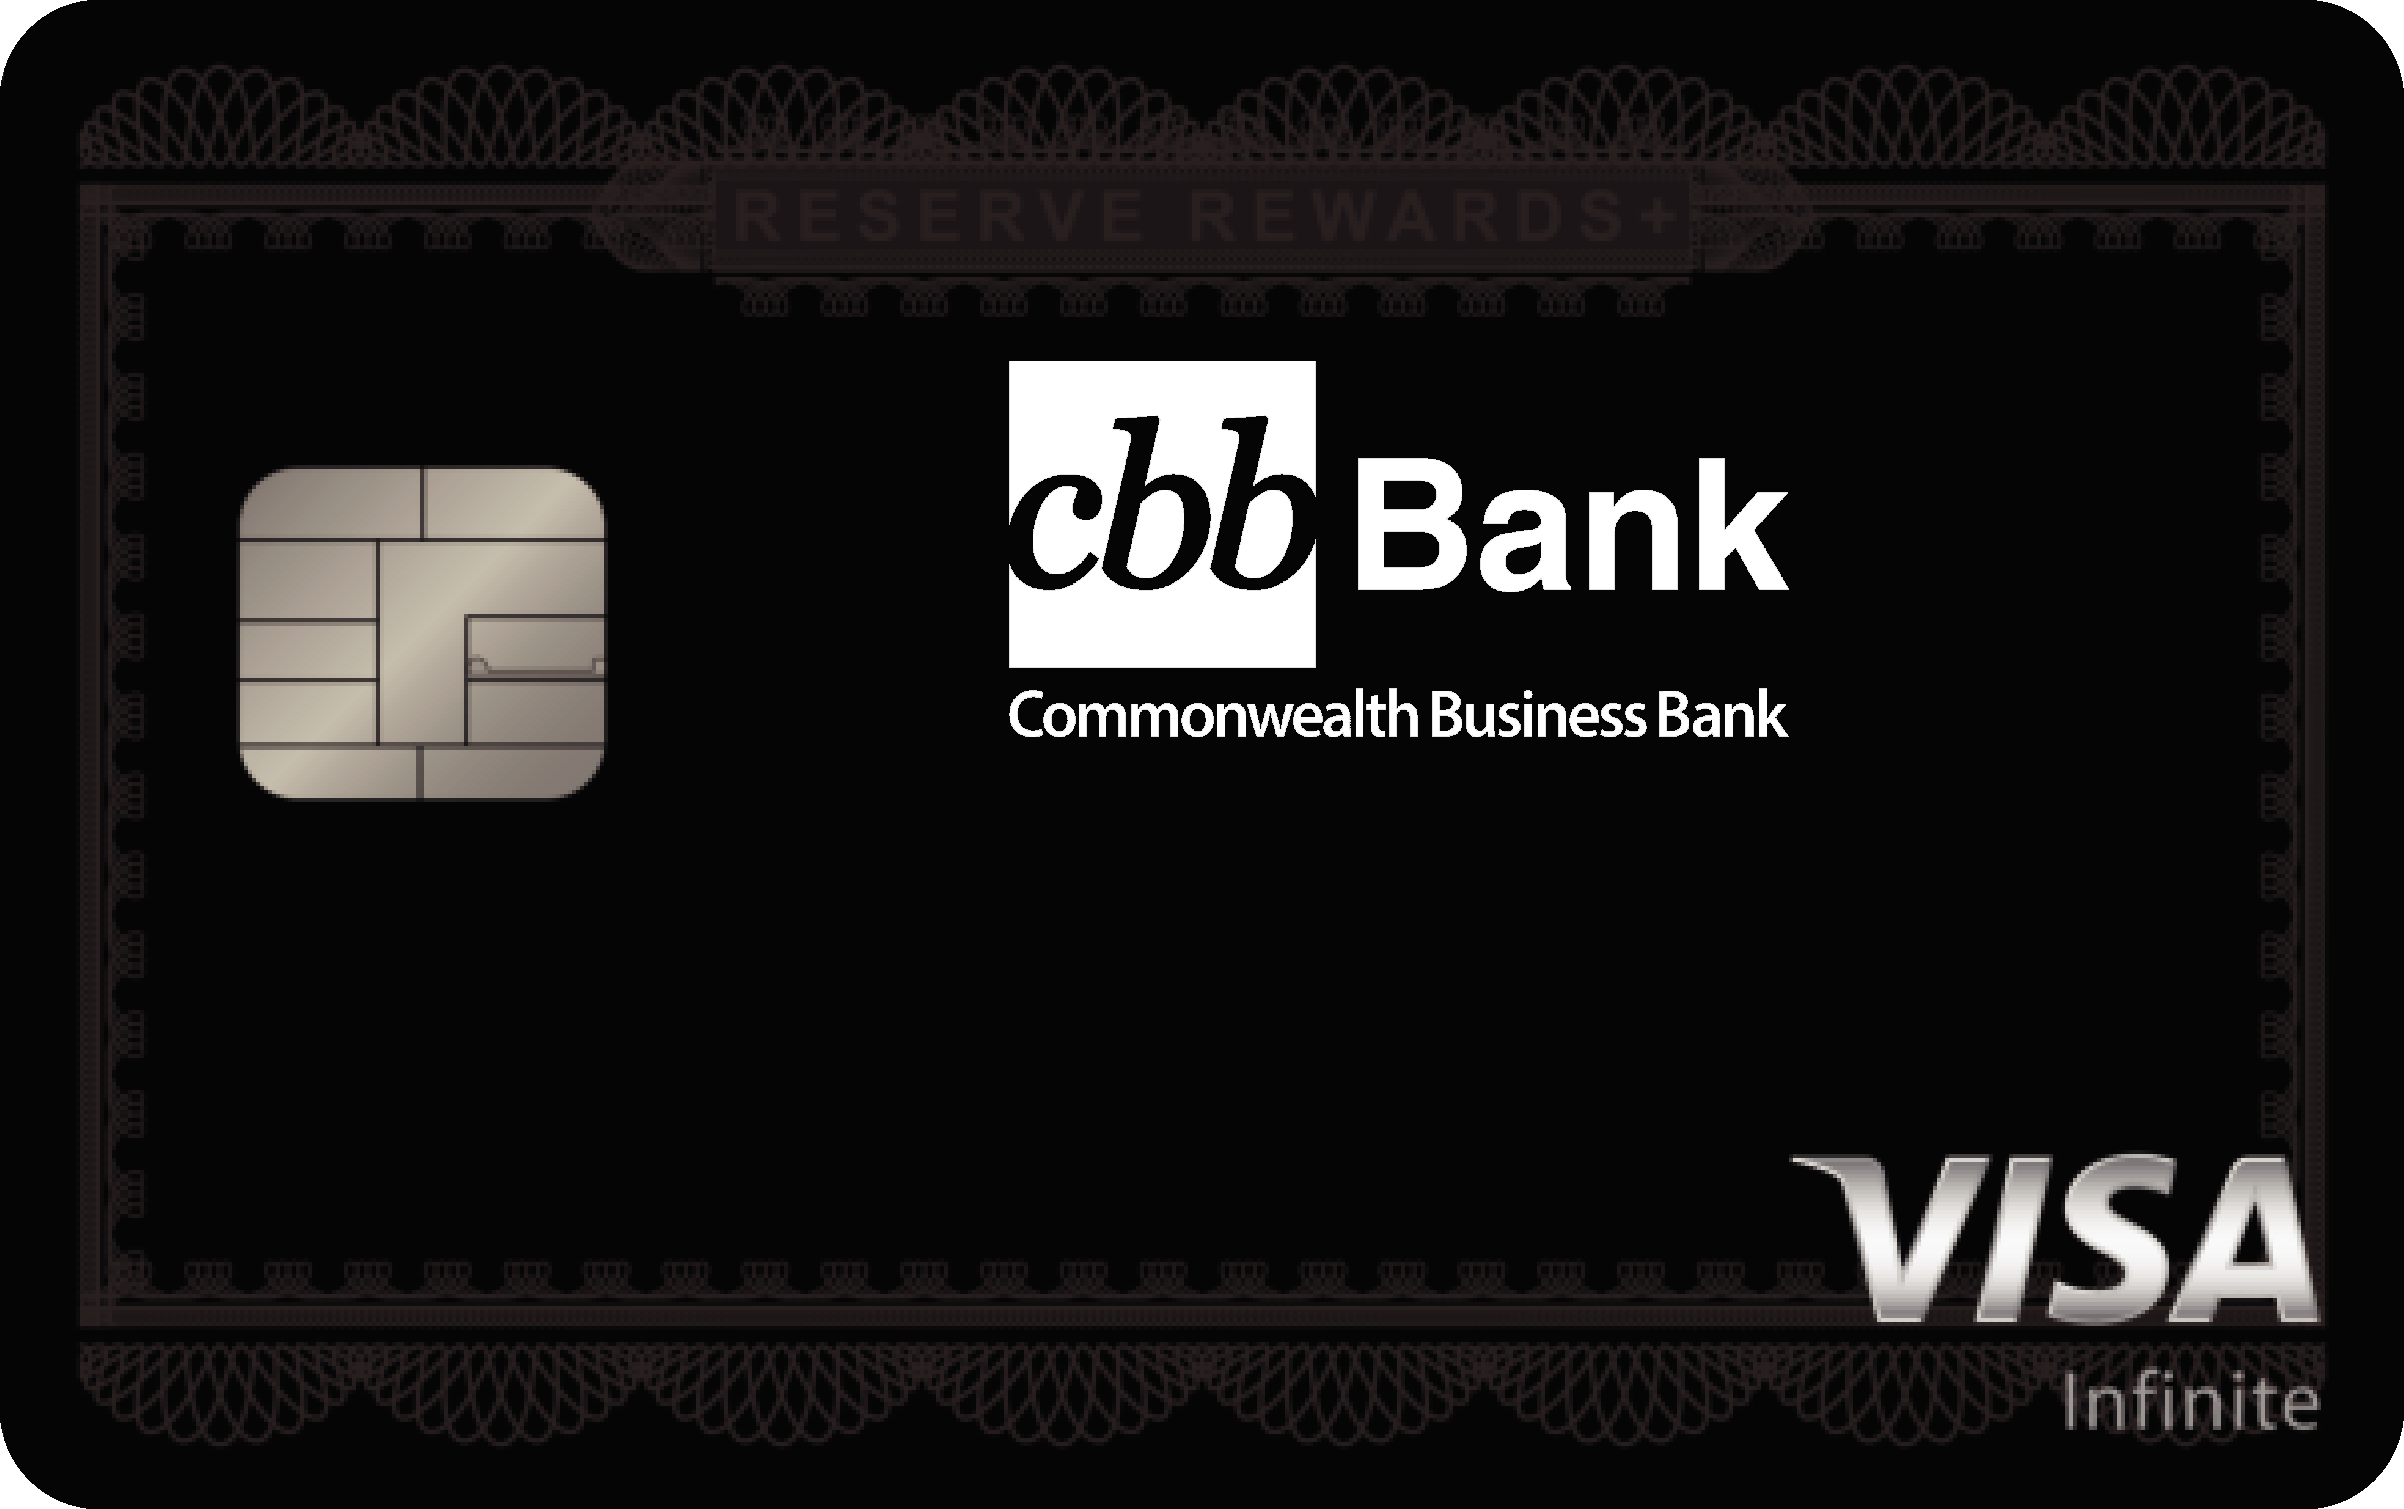 CBB Bank